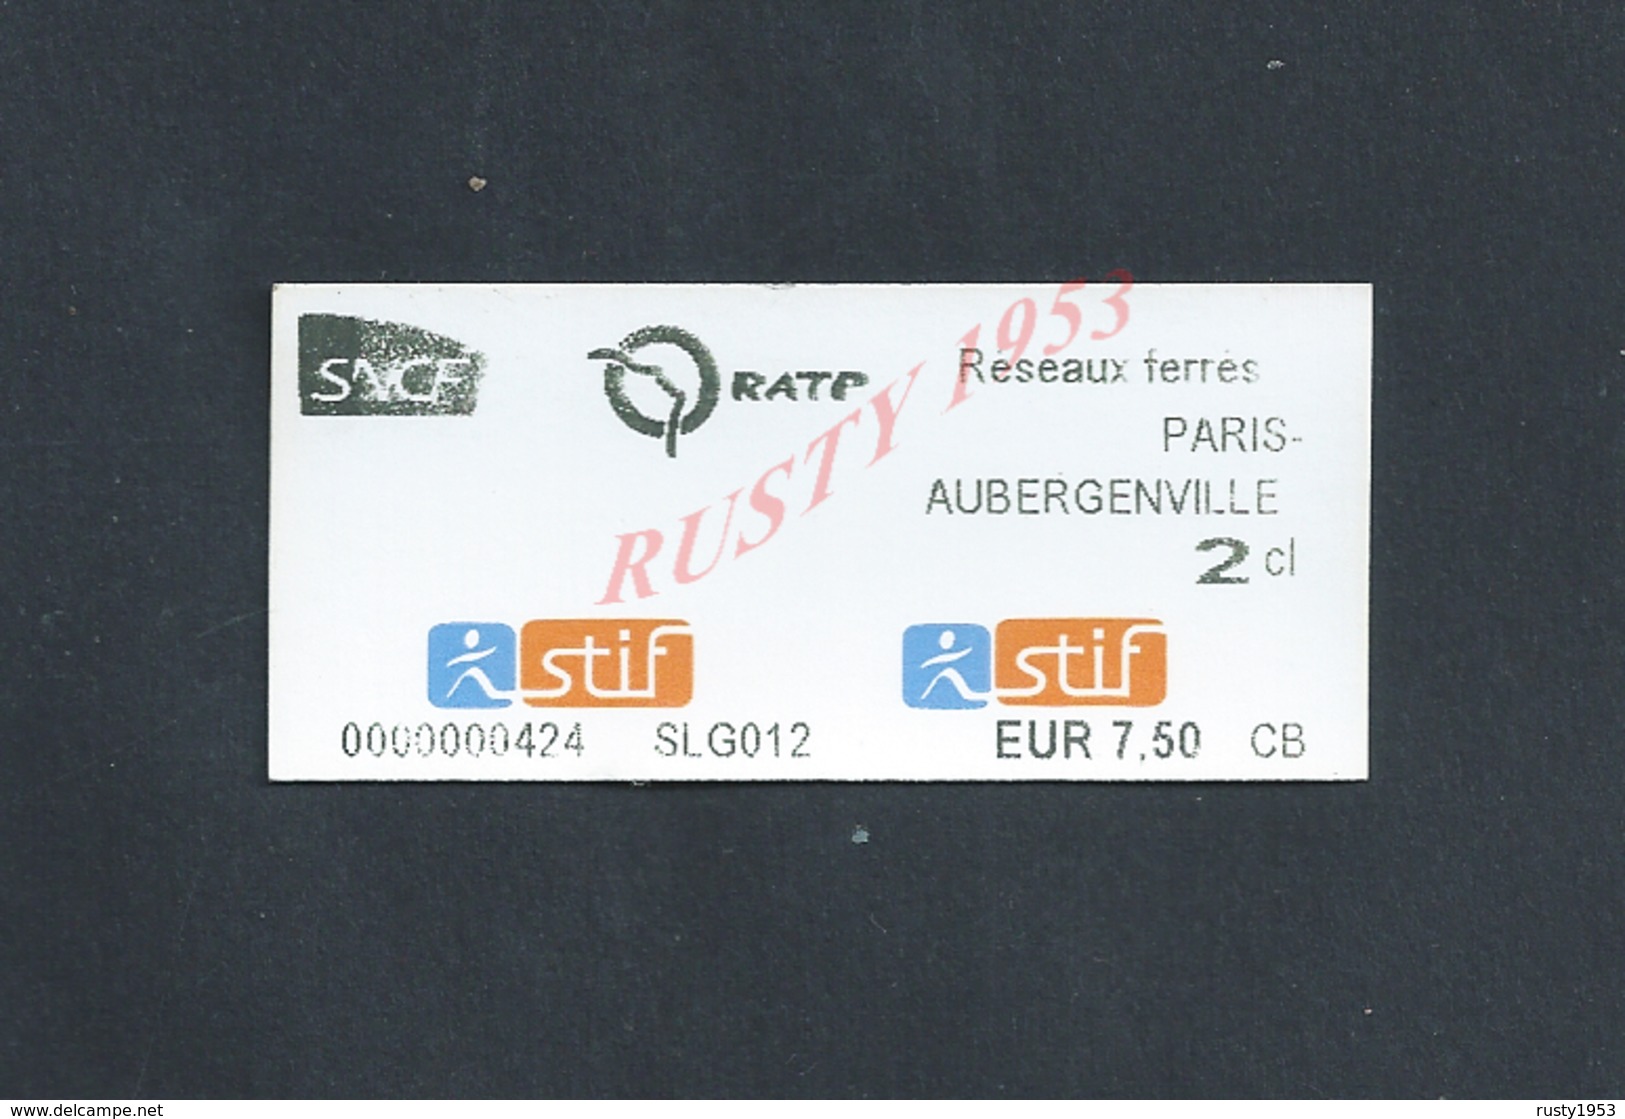 TICKET DE TRANSPORT SNCF R ATP BUS PARIS AUBERGENVILLE : - Europe